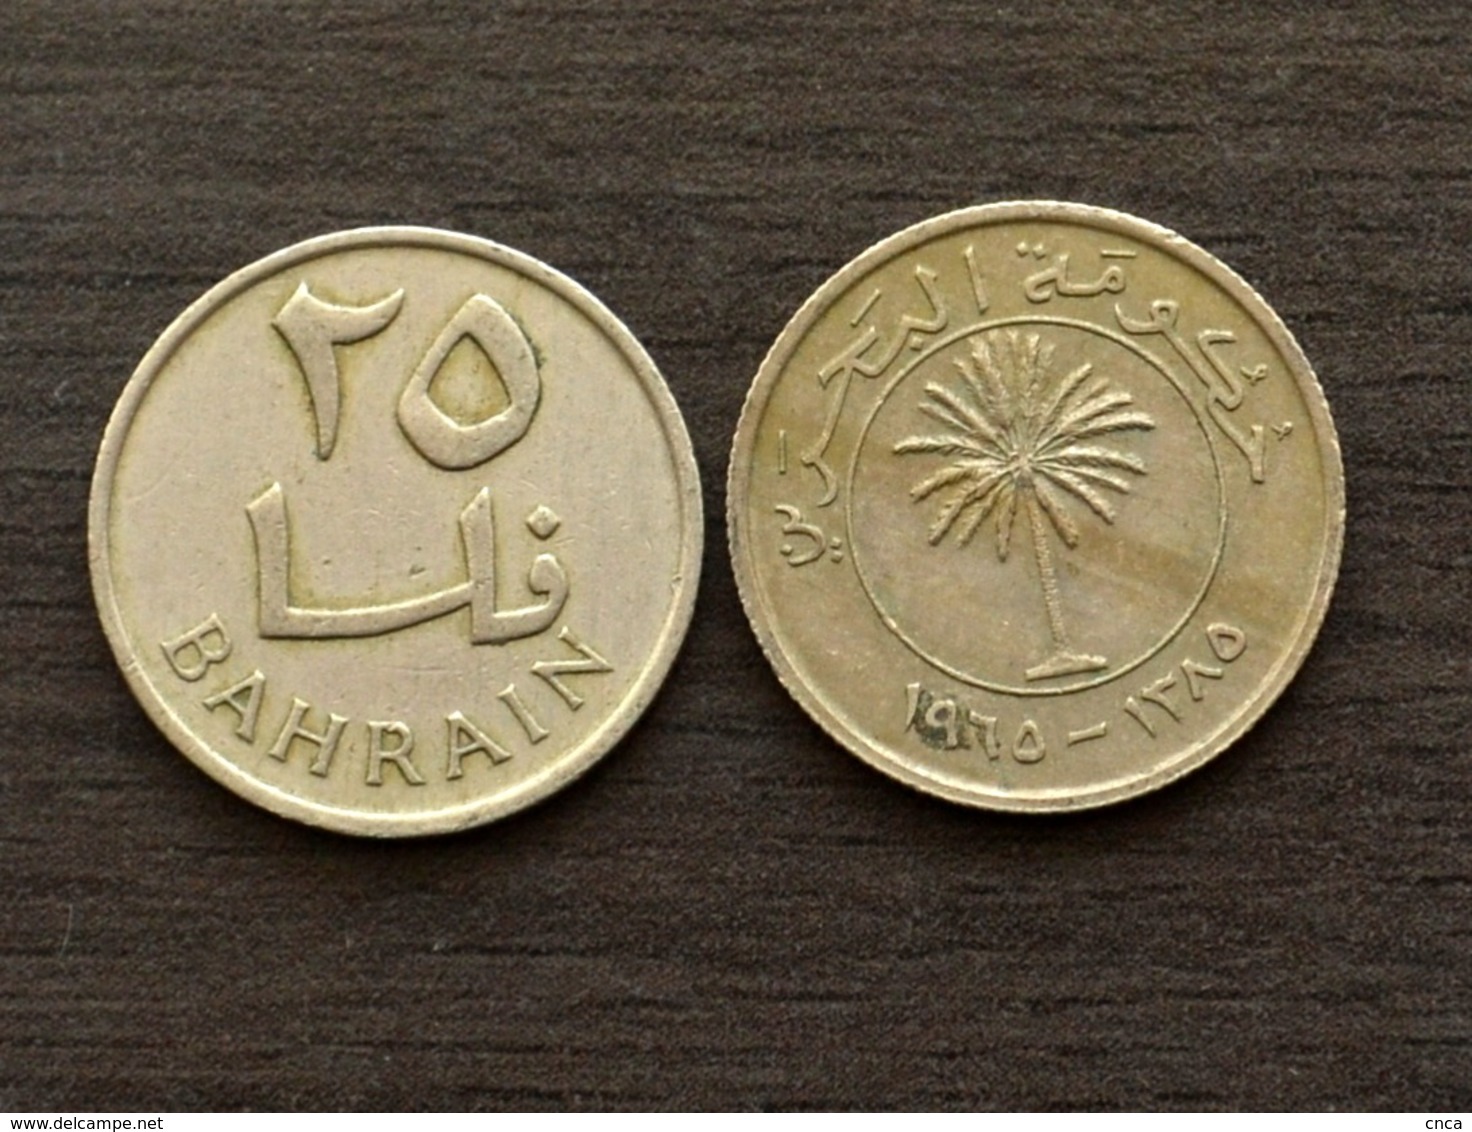 Bahrain 25 Fils 1965 Km4 COIN CURRENCY ASIA - Bahrein